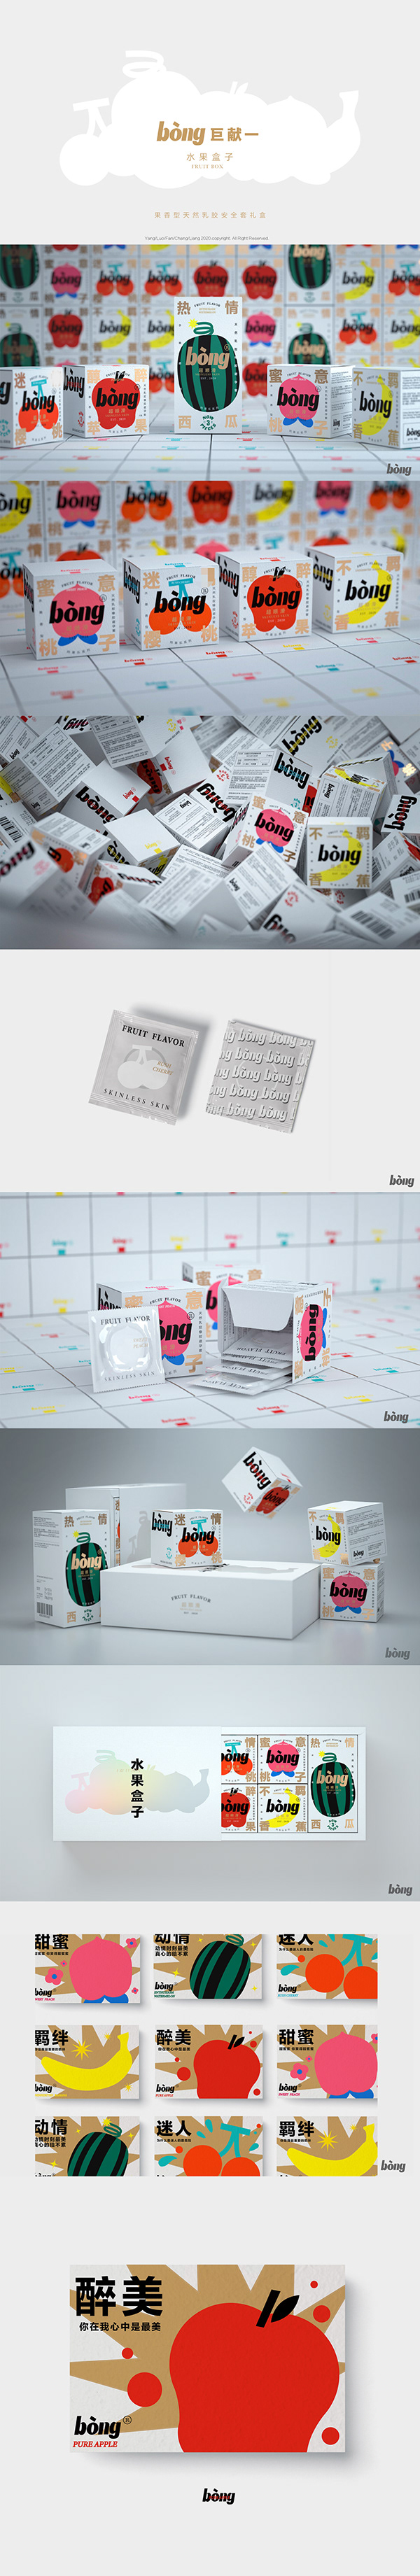 BONG! Condom packaging design